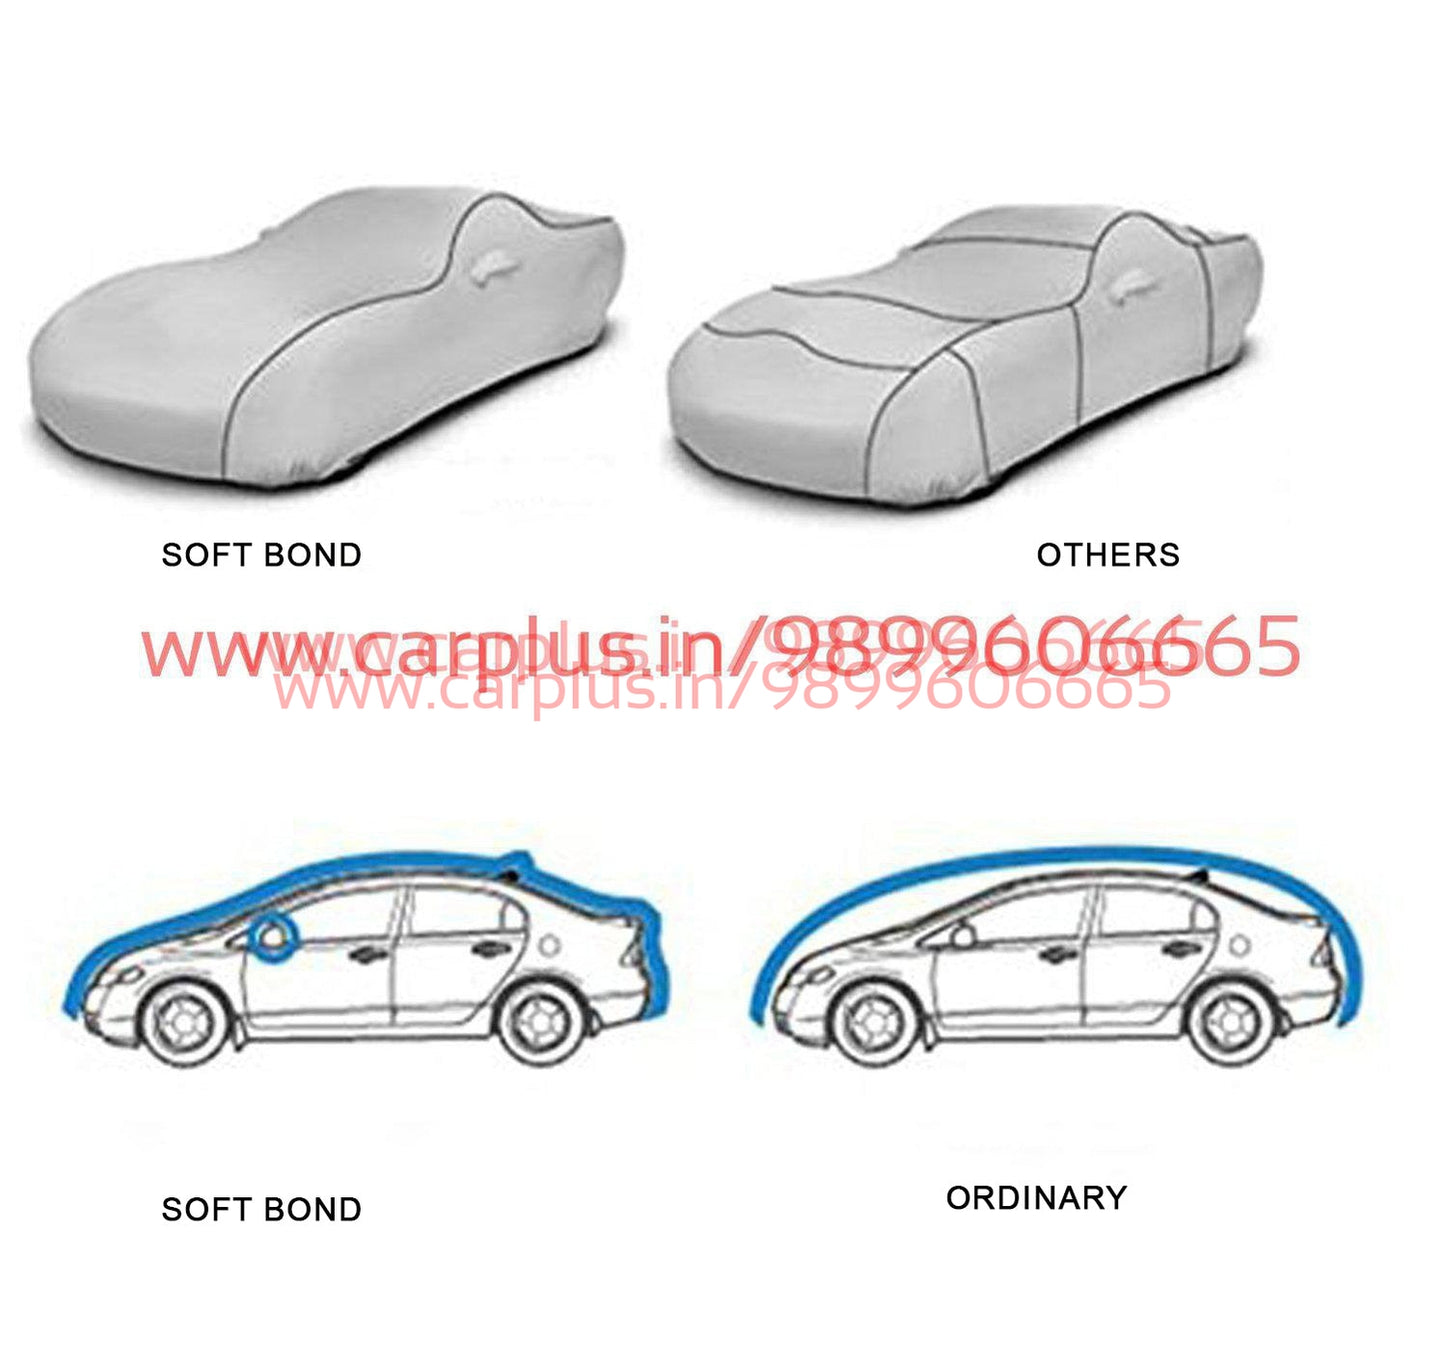 
                  
                    Soft Bond Body Covers for Toyota Innova Crysta (2nd GEN & 2nd GEN FL)-BODY COVER-SOFT BOND-NAVY BLUE-CARPLUS
                  
                